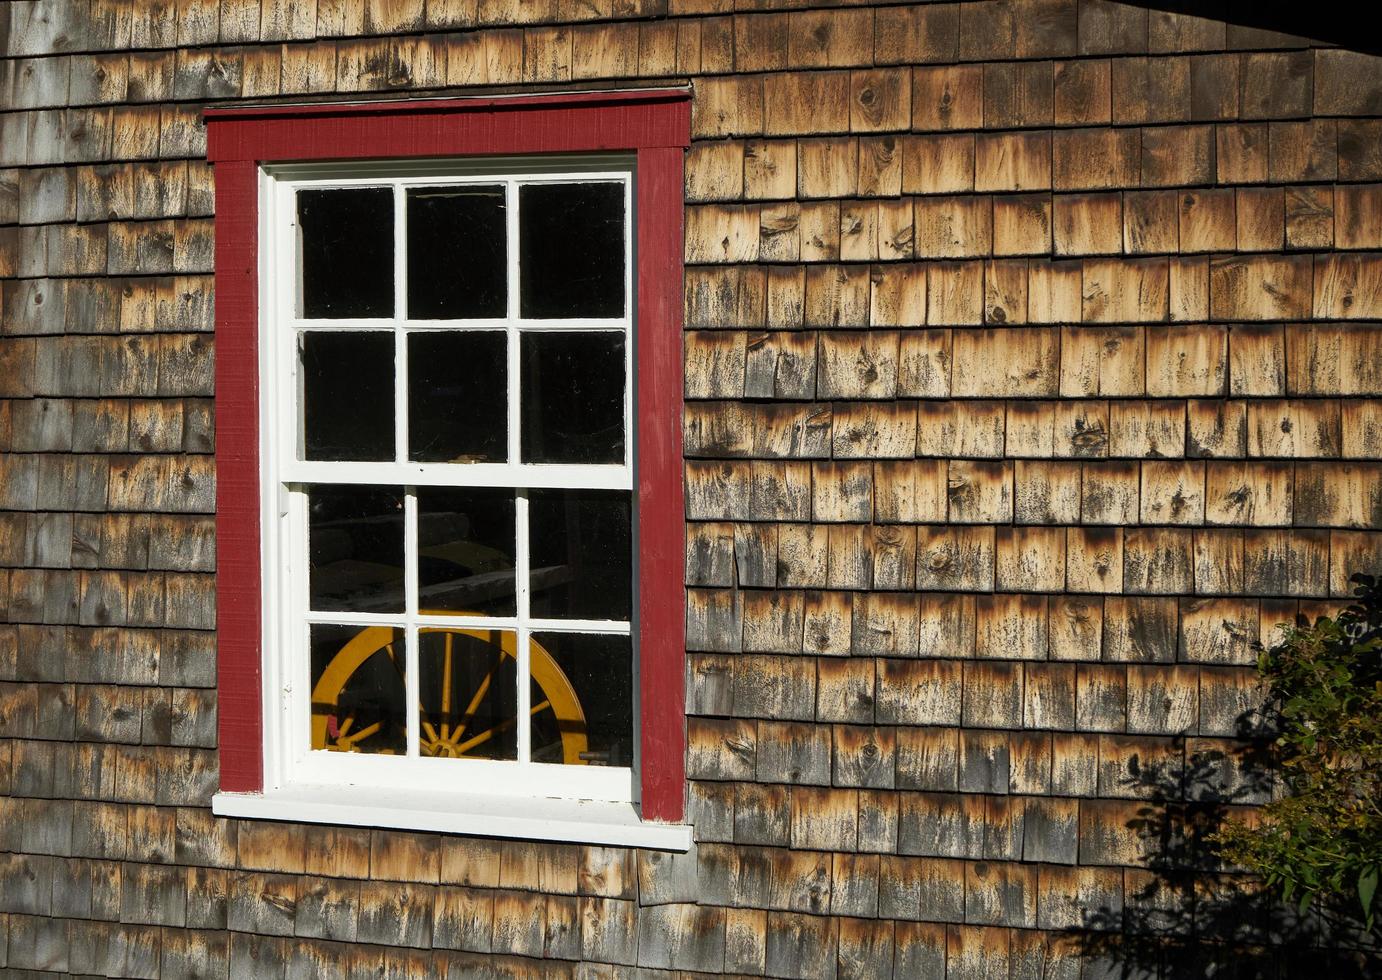 ulverton, quebec, canada, 11 ottobre 2019 - una finestra in legno foto